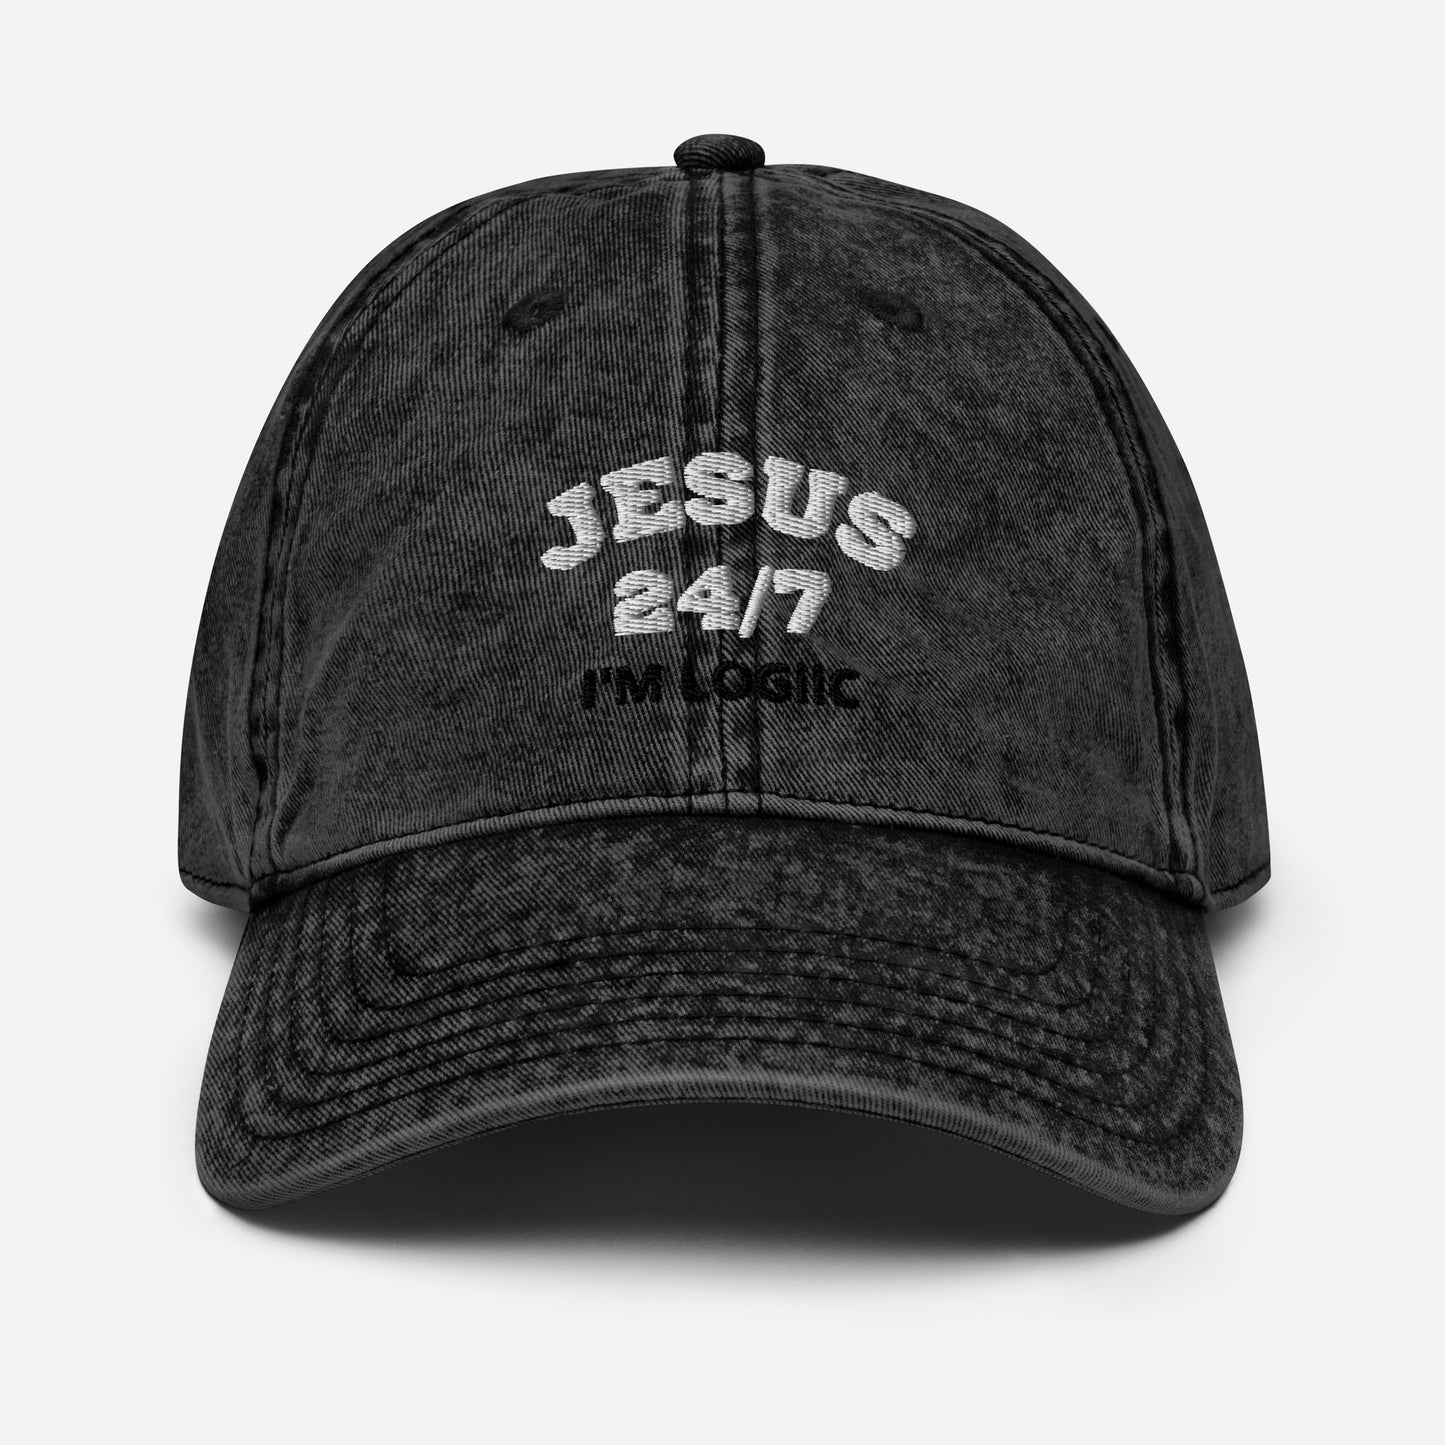 Jesus 24/7 Embroidery Vintage Cotton Twill Cap - Black -